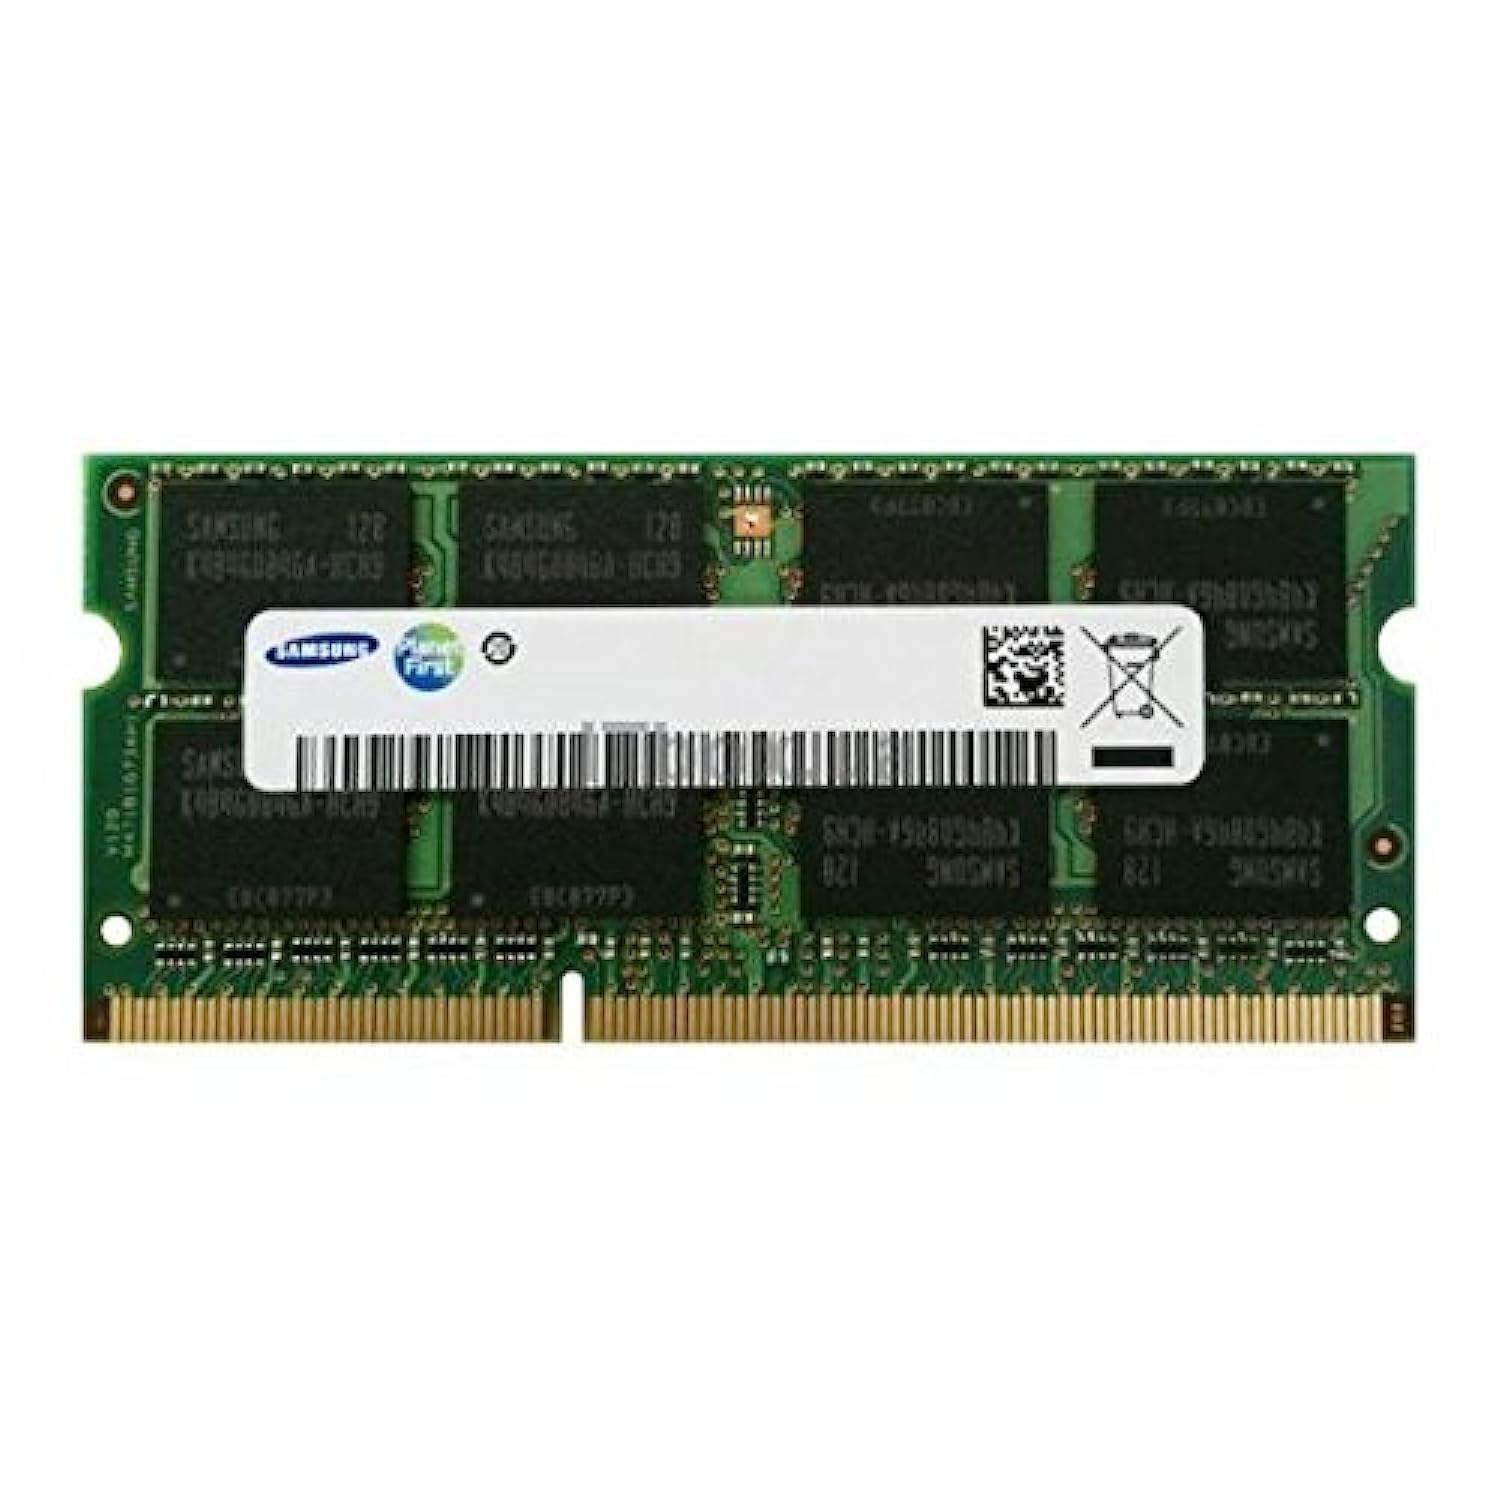 Samsung original 8GB (1 x 8GB) 204-pin SODIMM, DDR3 PC3L-12800, 1600MHz ram memory module for laptops (M471B1G73EB0-YK0) by Samsung